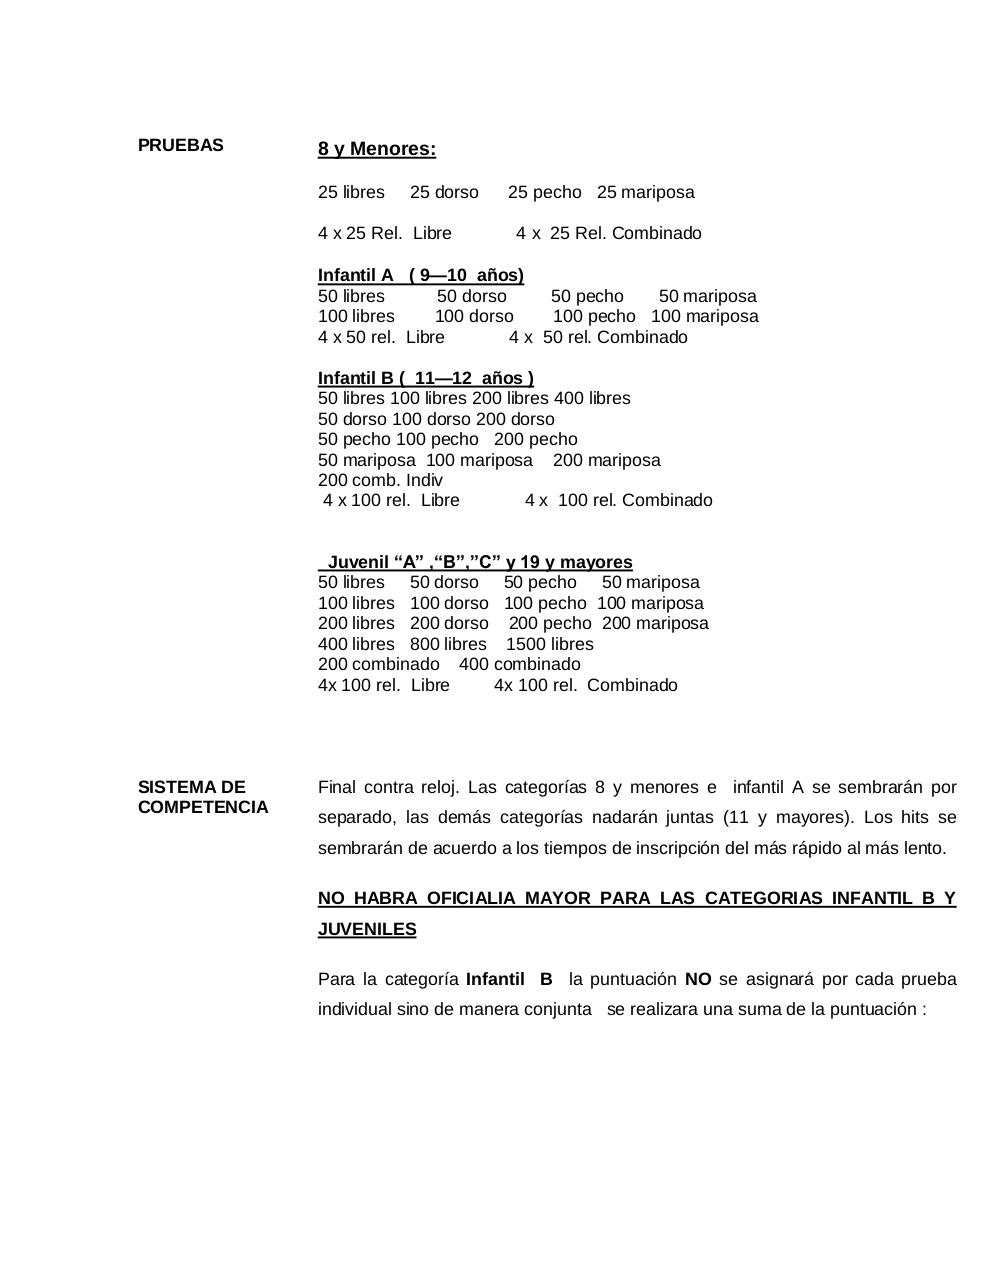 Vista previa del archivo PDF convocatoriac-estatalc-c-2014.pdf